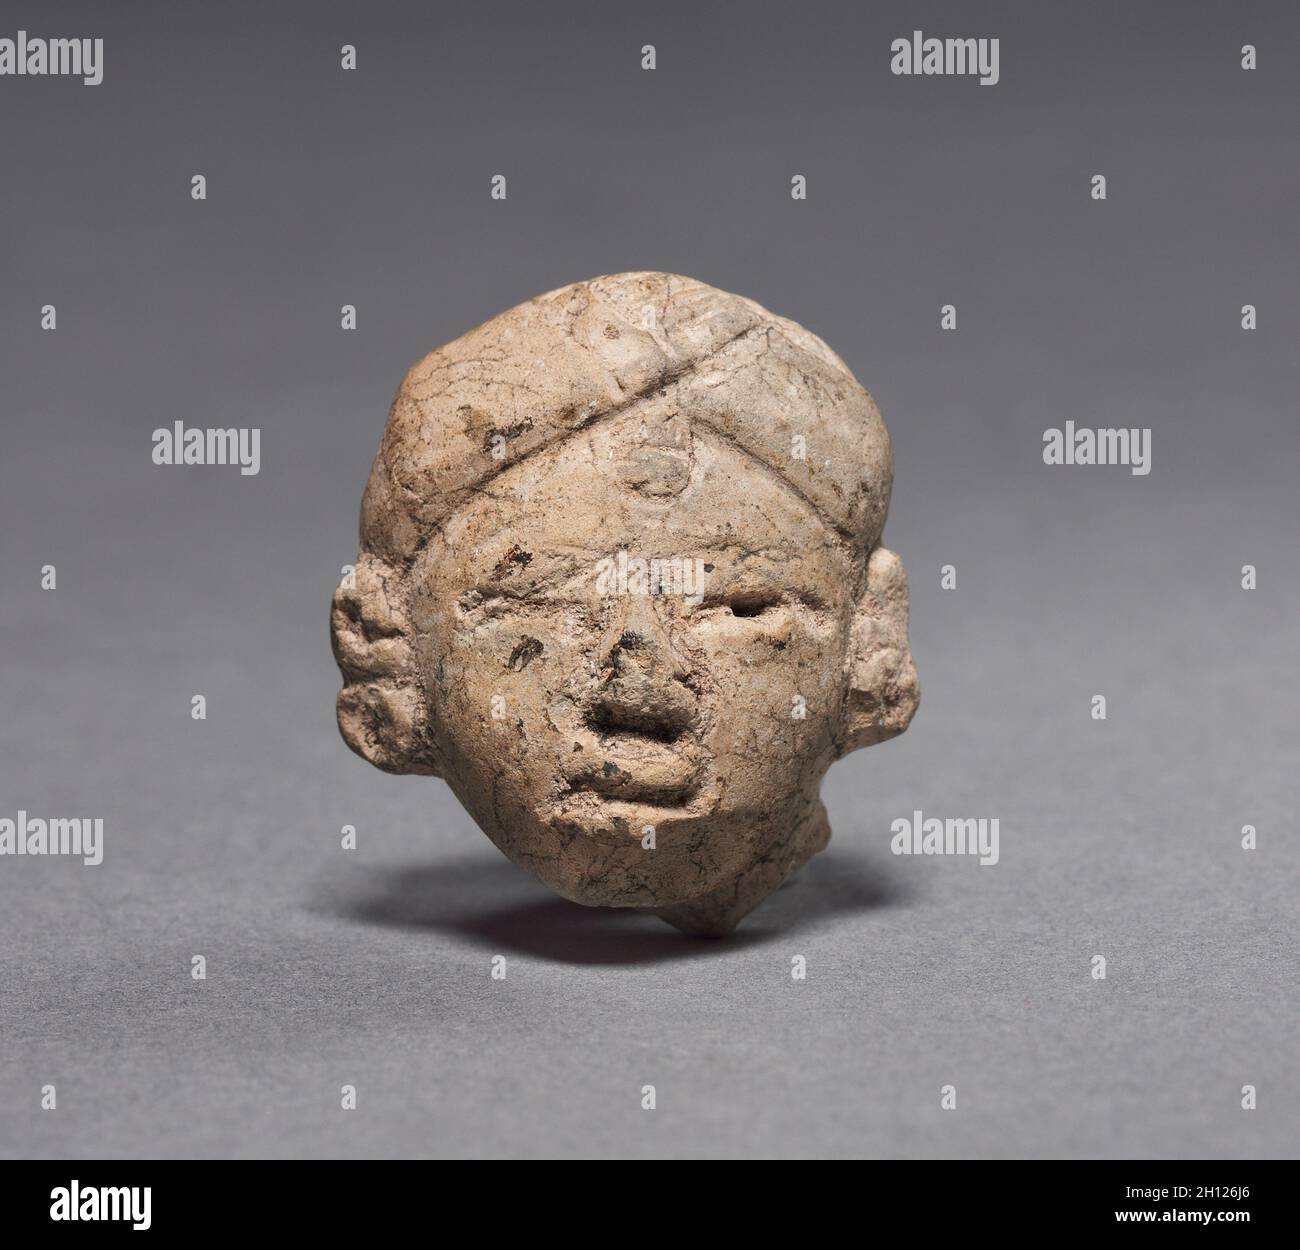 Figurine Head, c. 600-200 BC. Mexico or Central America, Maya(?), Middle Preclassic period. Pottery; overall: 3.1 x 2.6 x 1.9 cm (1 1/4 x 1 x 3/4 in.). Stock Photo